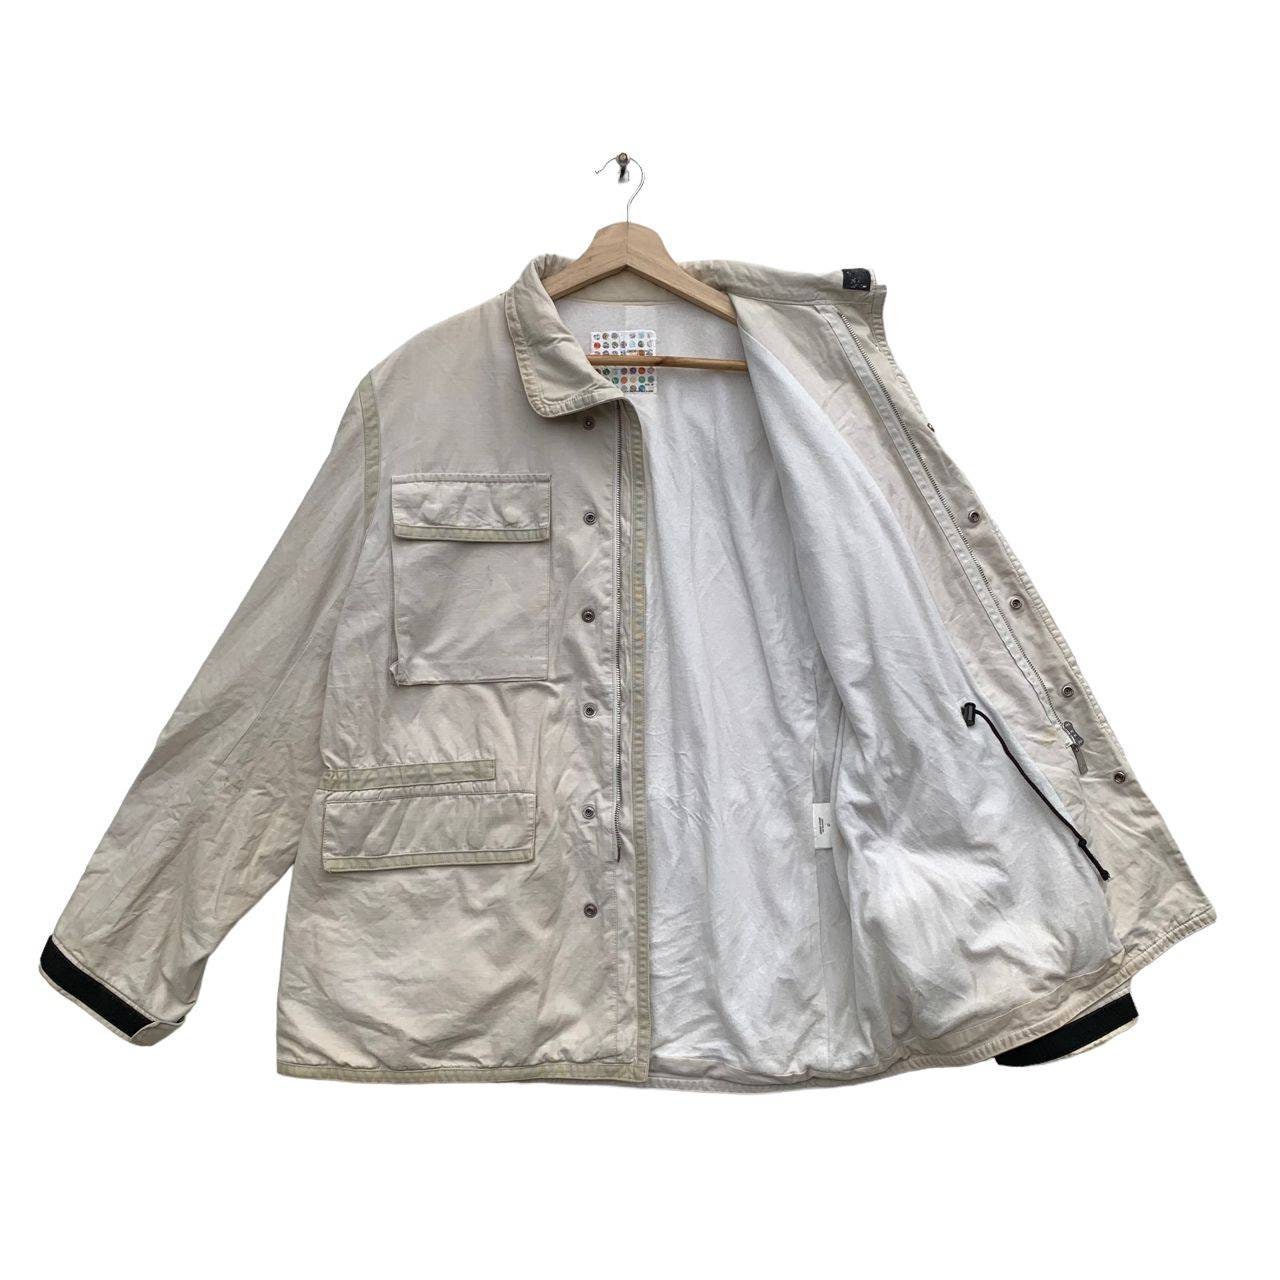 Vintage AW 00-01 Undercover M65 Jacket Medium Size - Etsy 日本